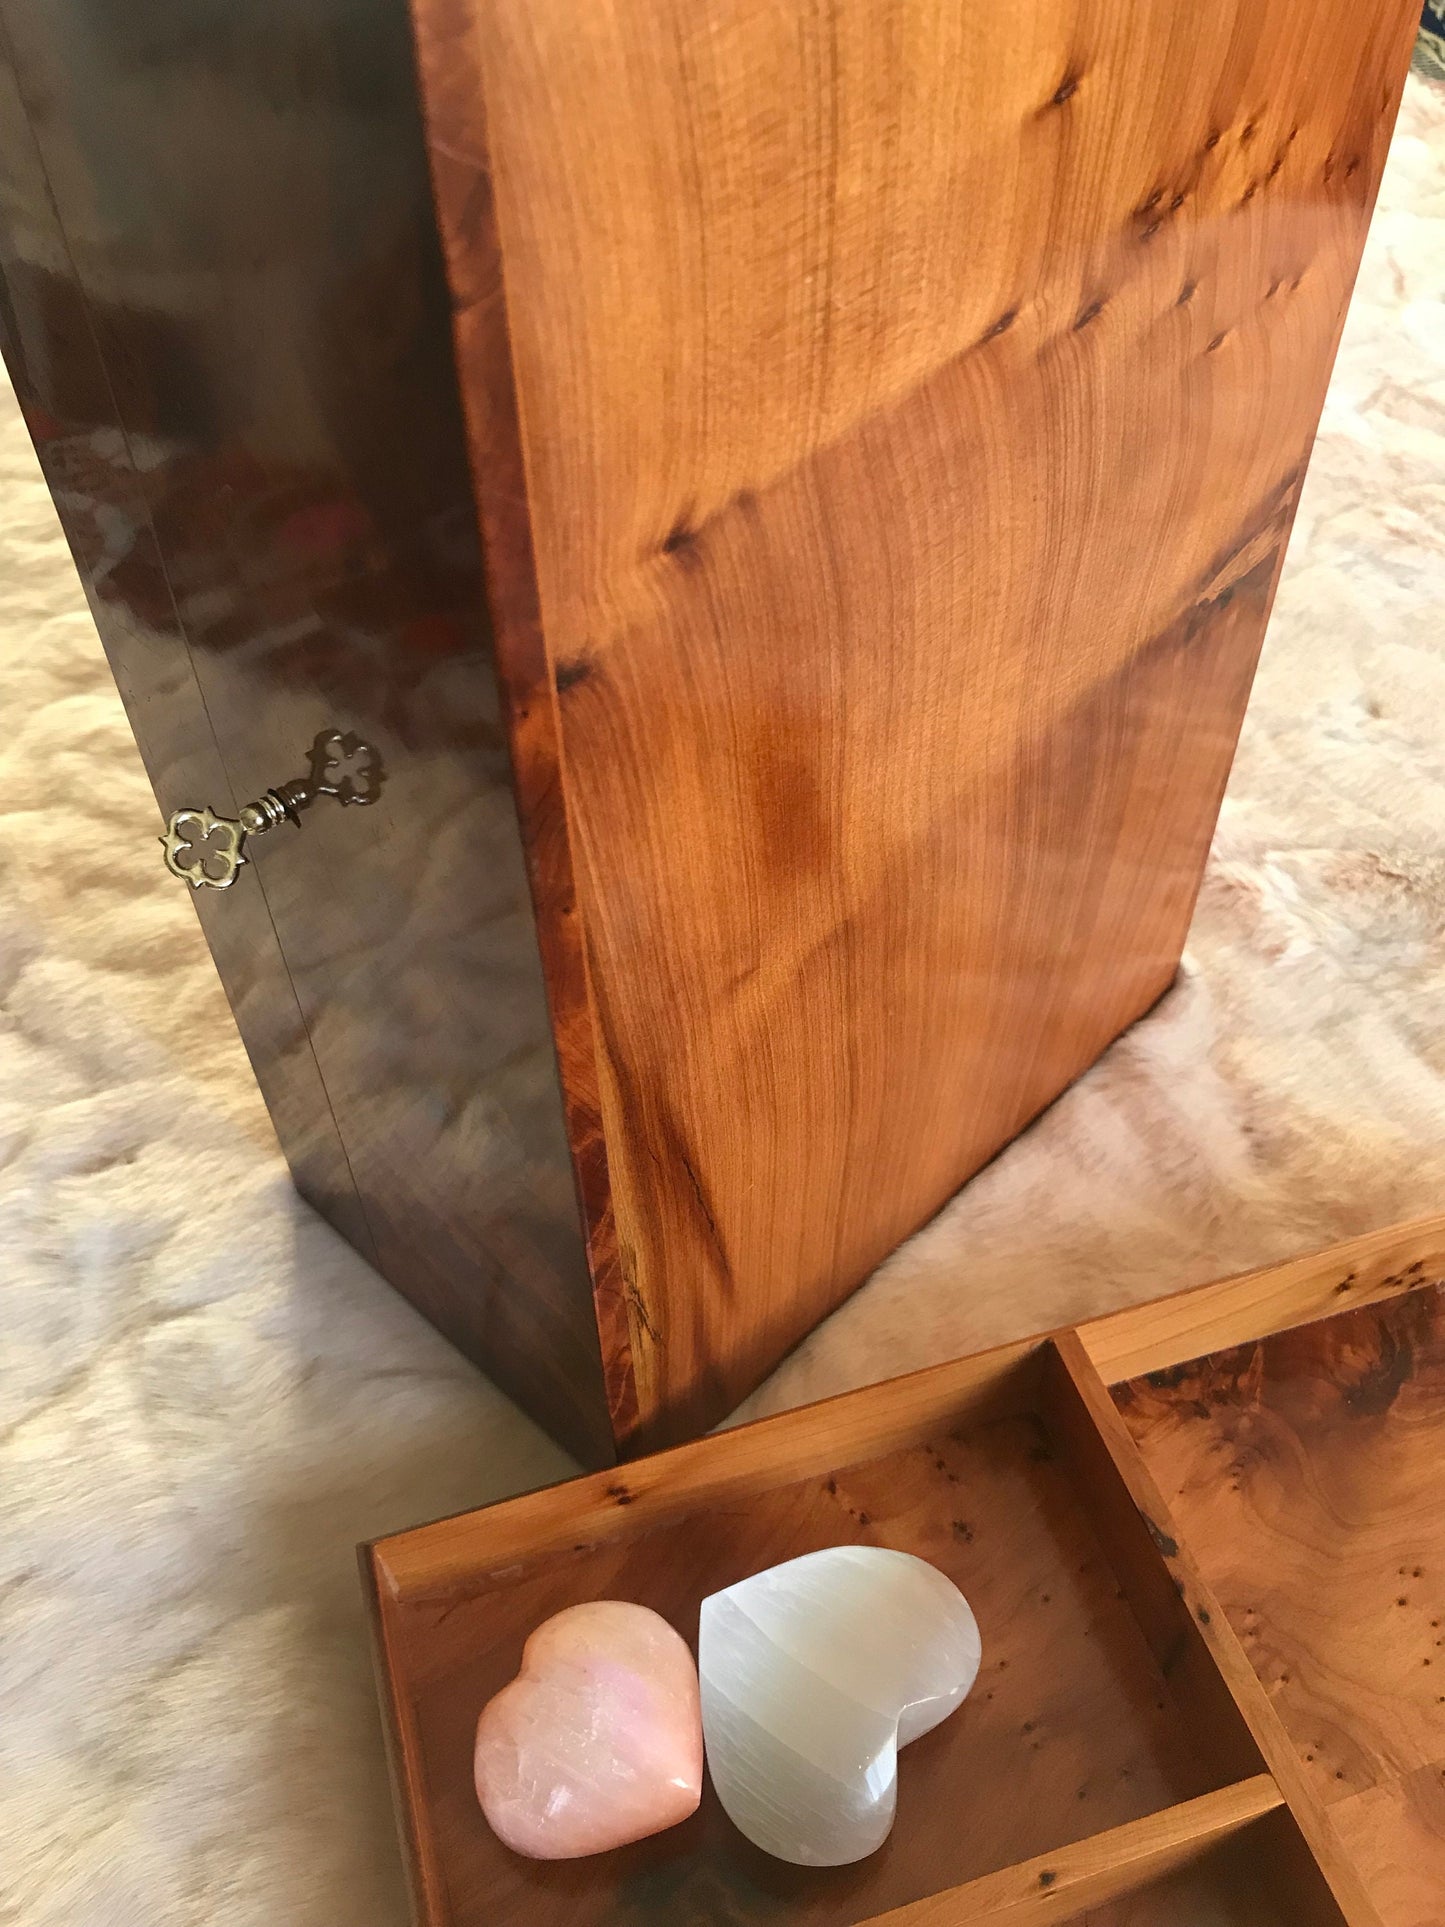 Moroccan Large Jewelry Box with lock,Luxury design thuya wood,Gift idea,Wedding Keepsake Memory box with key,Birthday,Christmas Couples gift